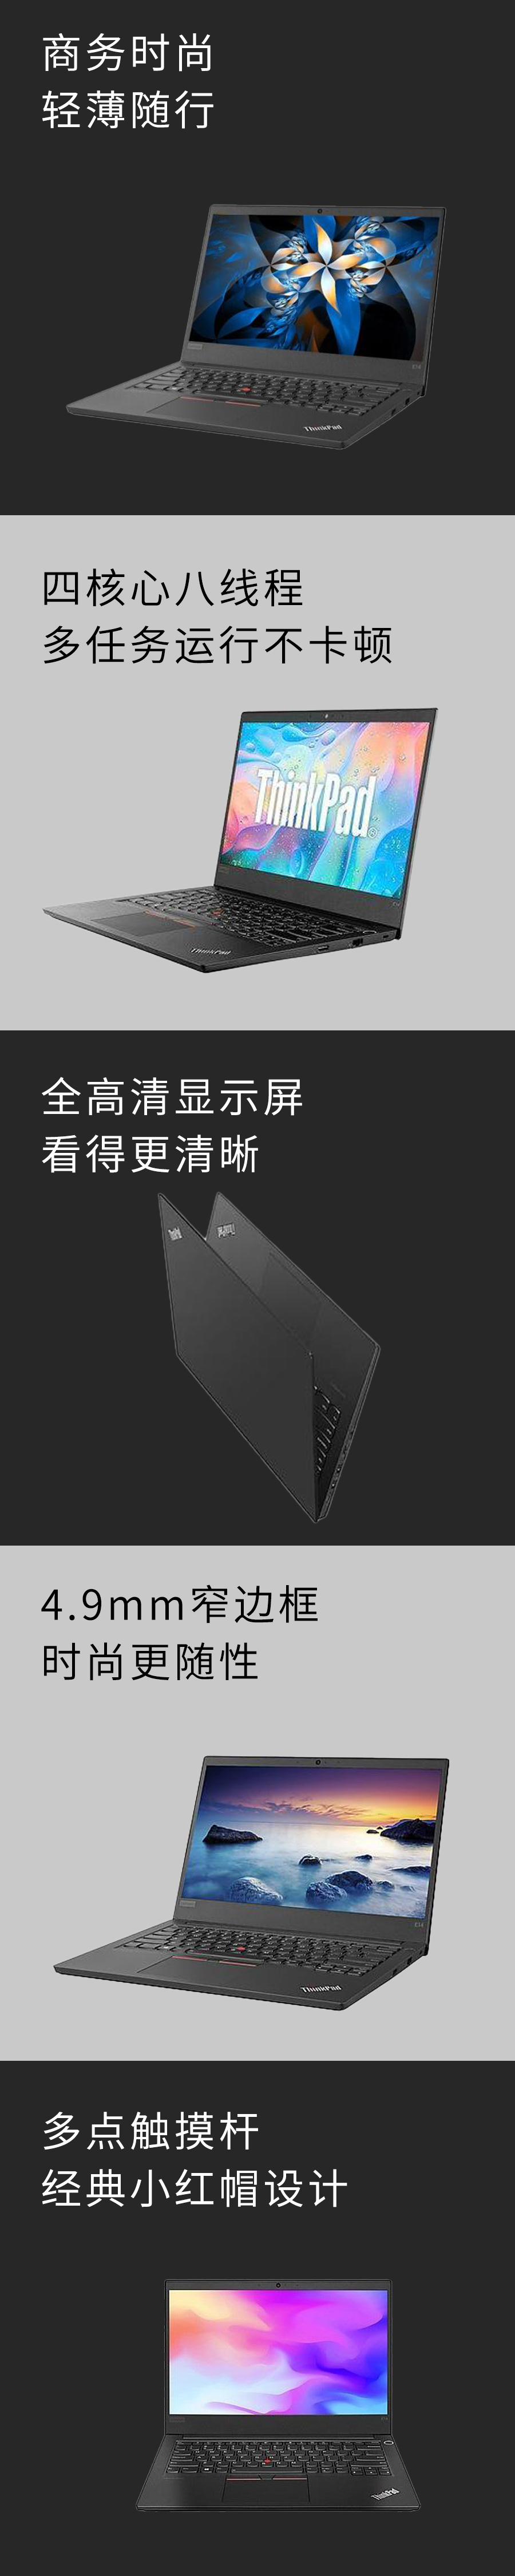 ThinkPad-E14.jpg